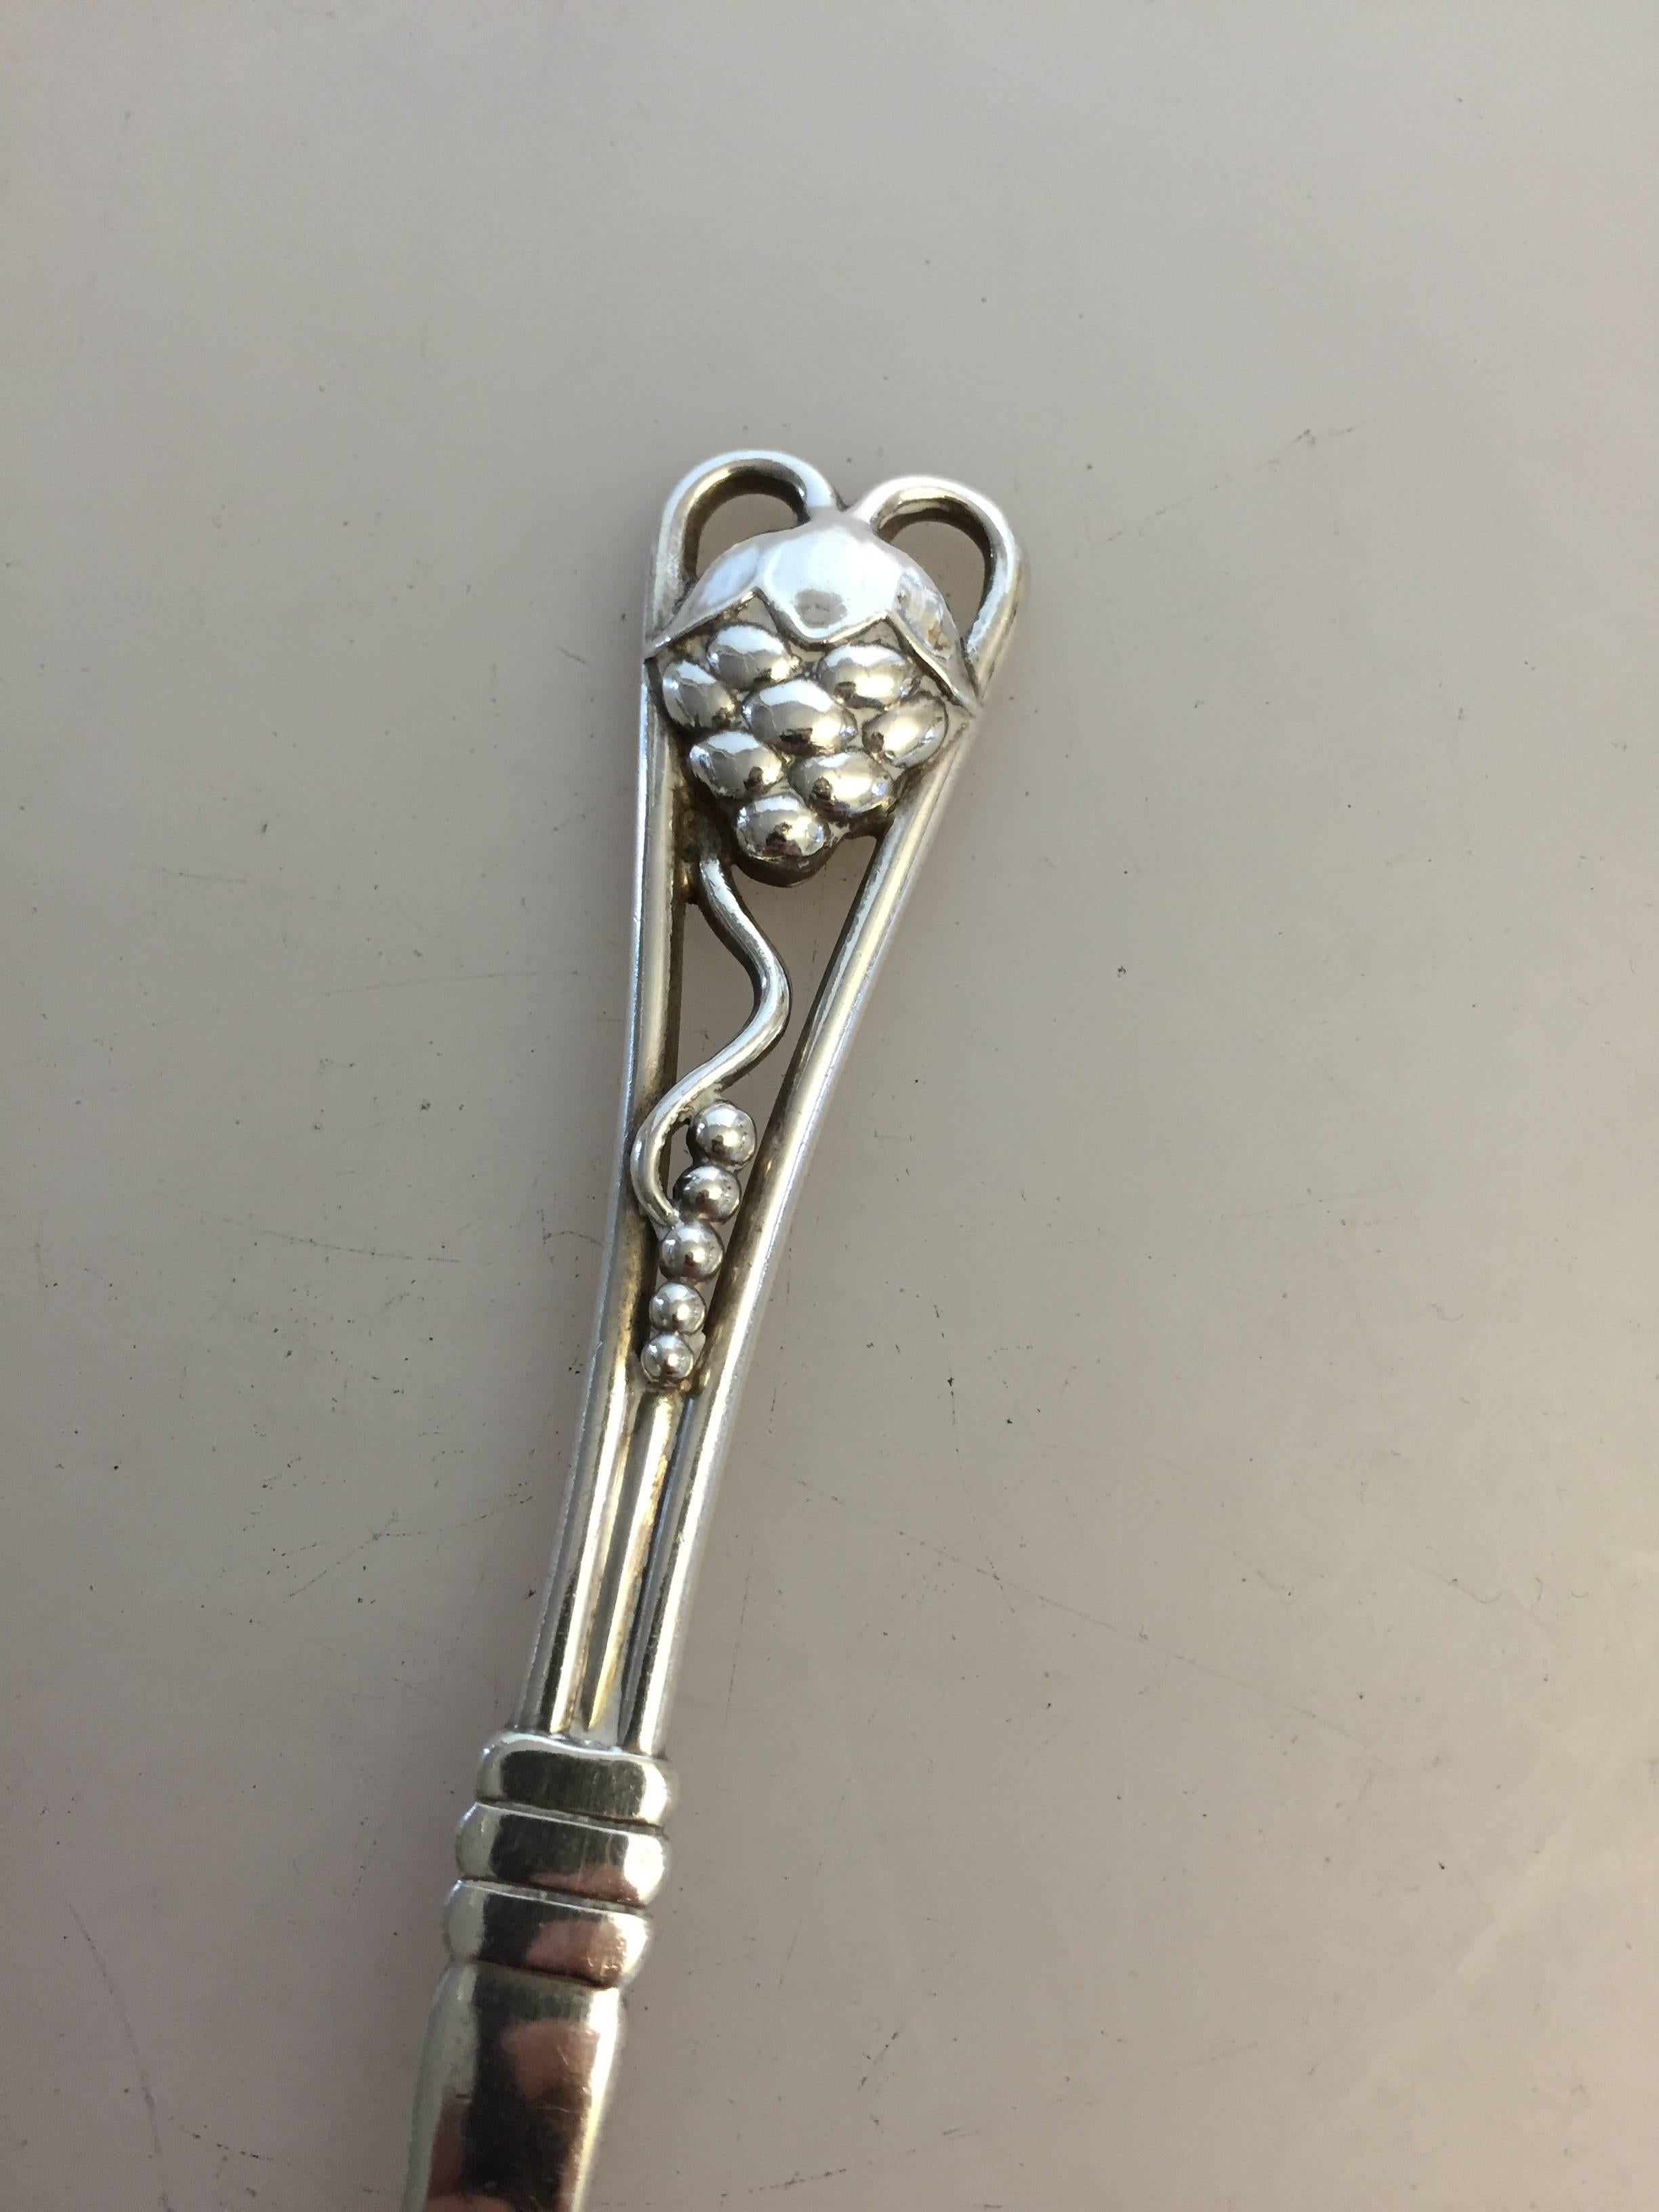 Georg Jensen 830 silver serving fork #72. From 1915-1930. 

Measures: 18 cm L.
Weighs 2.10 oz / 59 g.